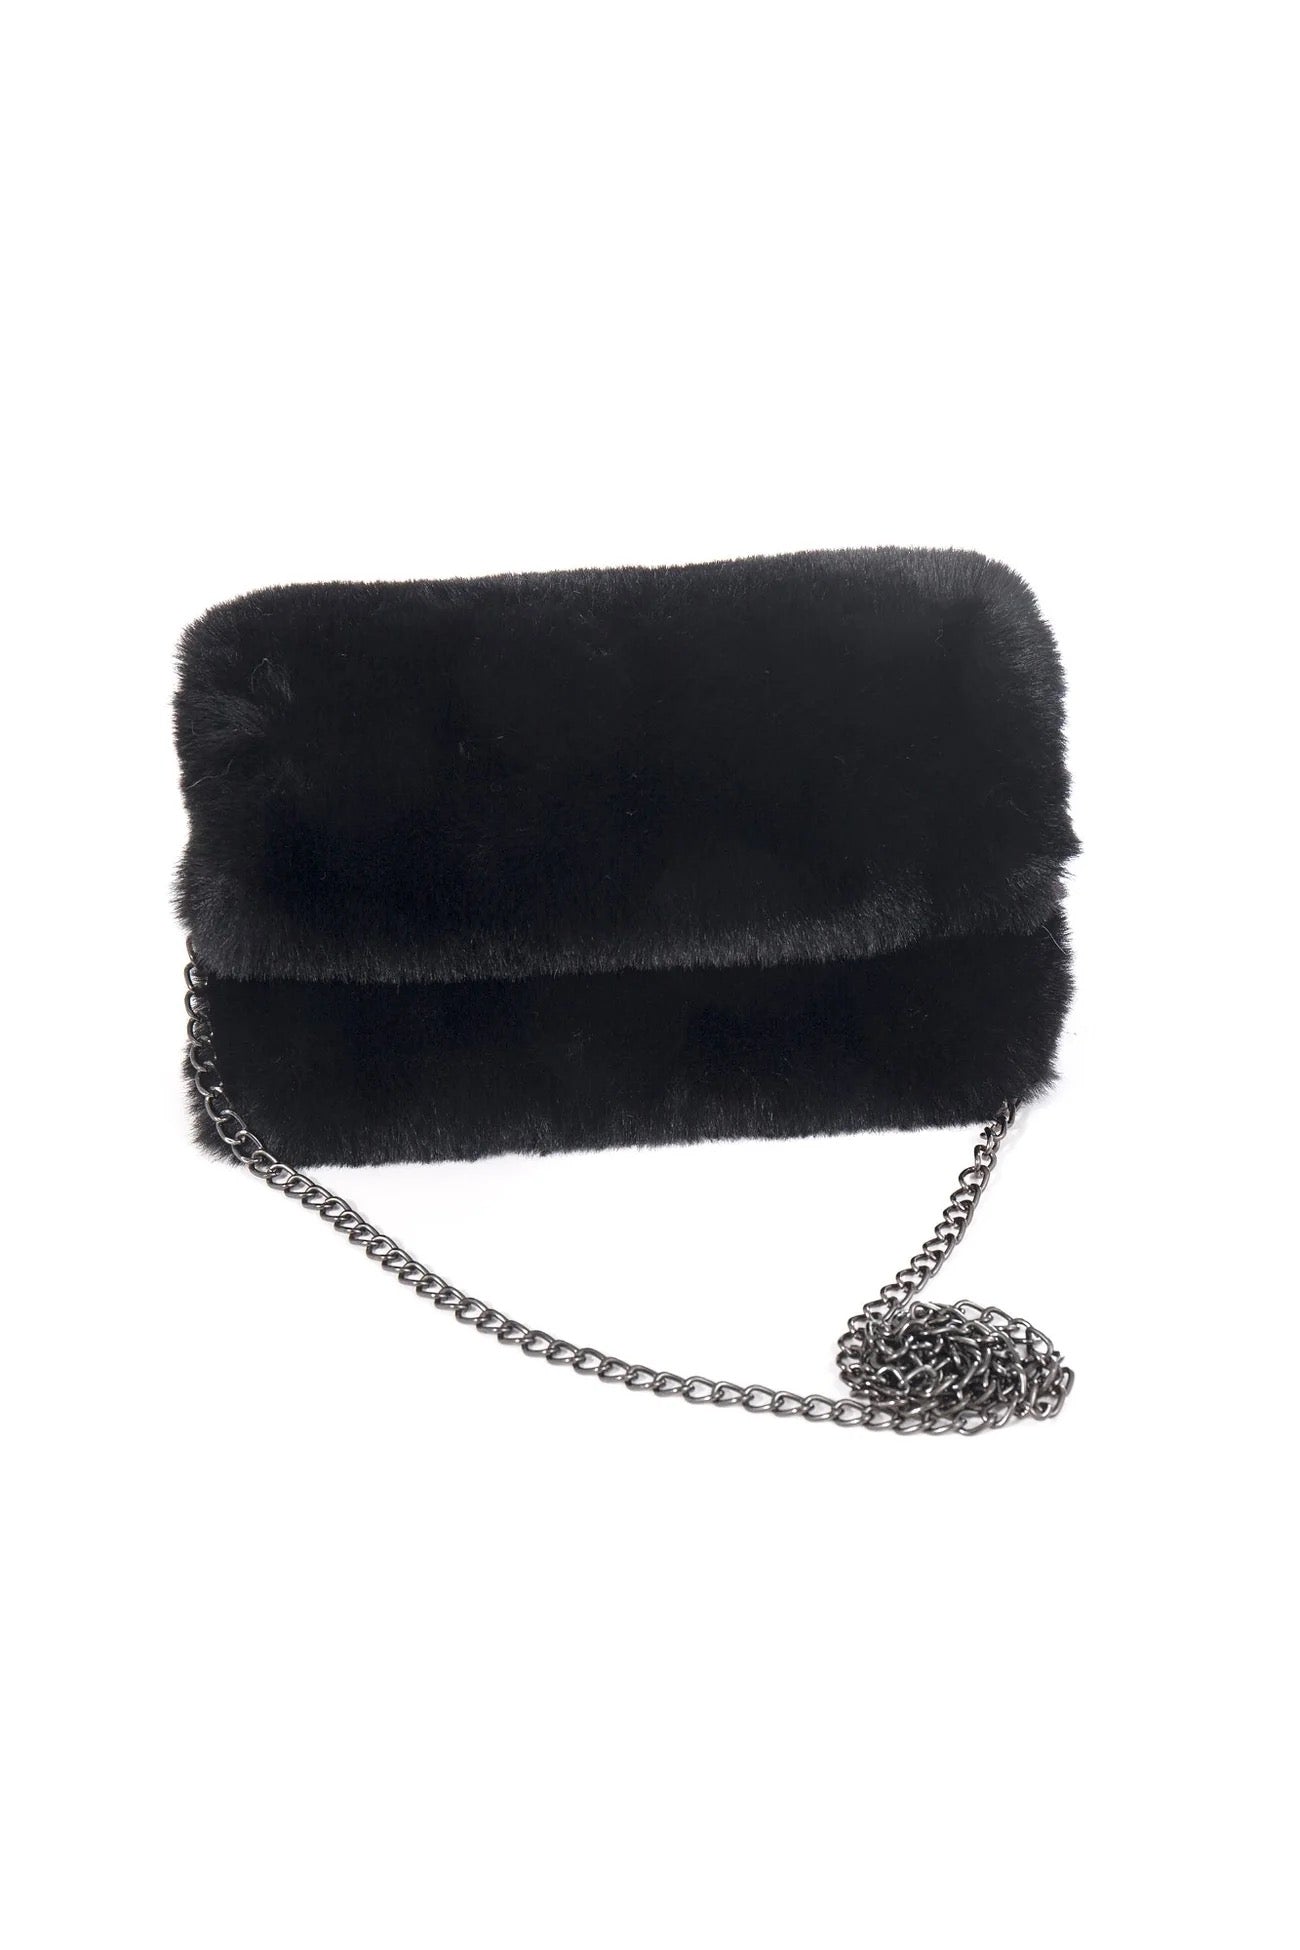 Park Lane Slate Grey Faux Fur Crossbody Handbag with Chain Strap